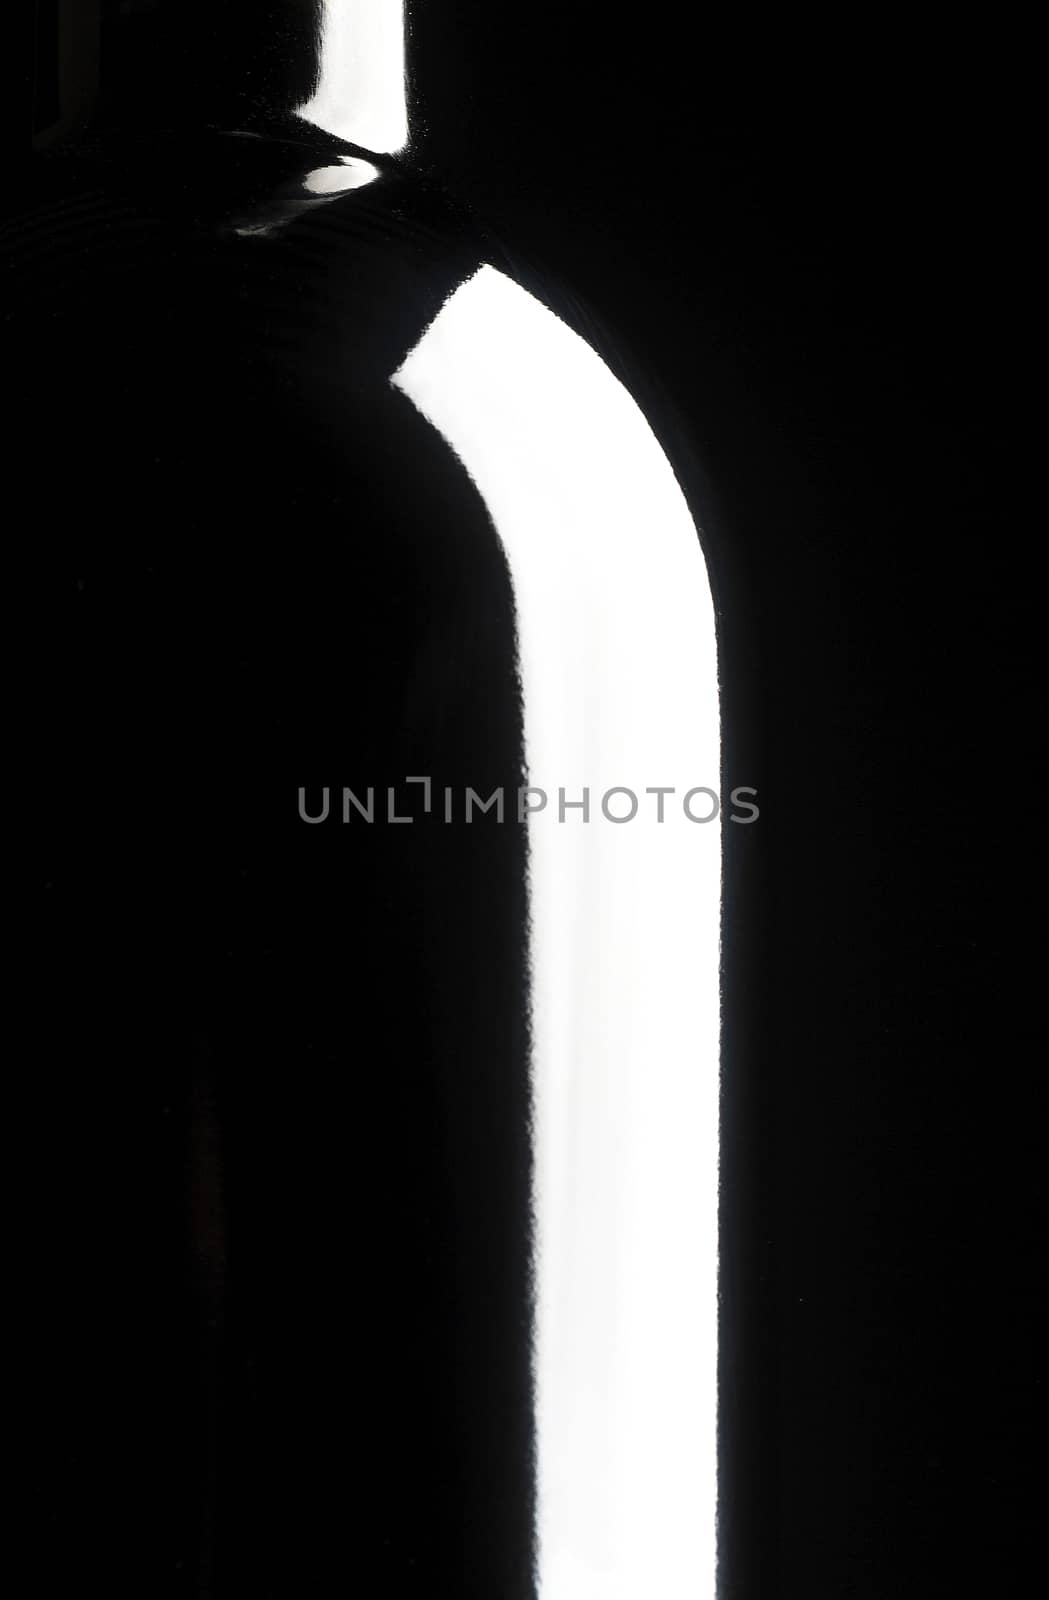 Silhouette of wine bottle, black background by jalonsohu@gmail.com